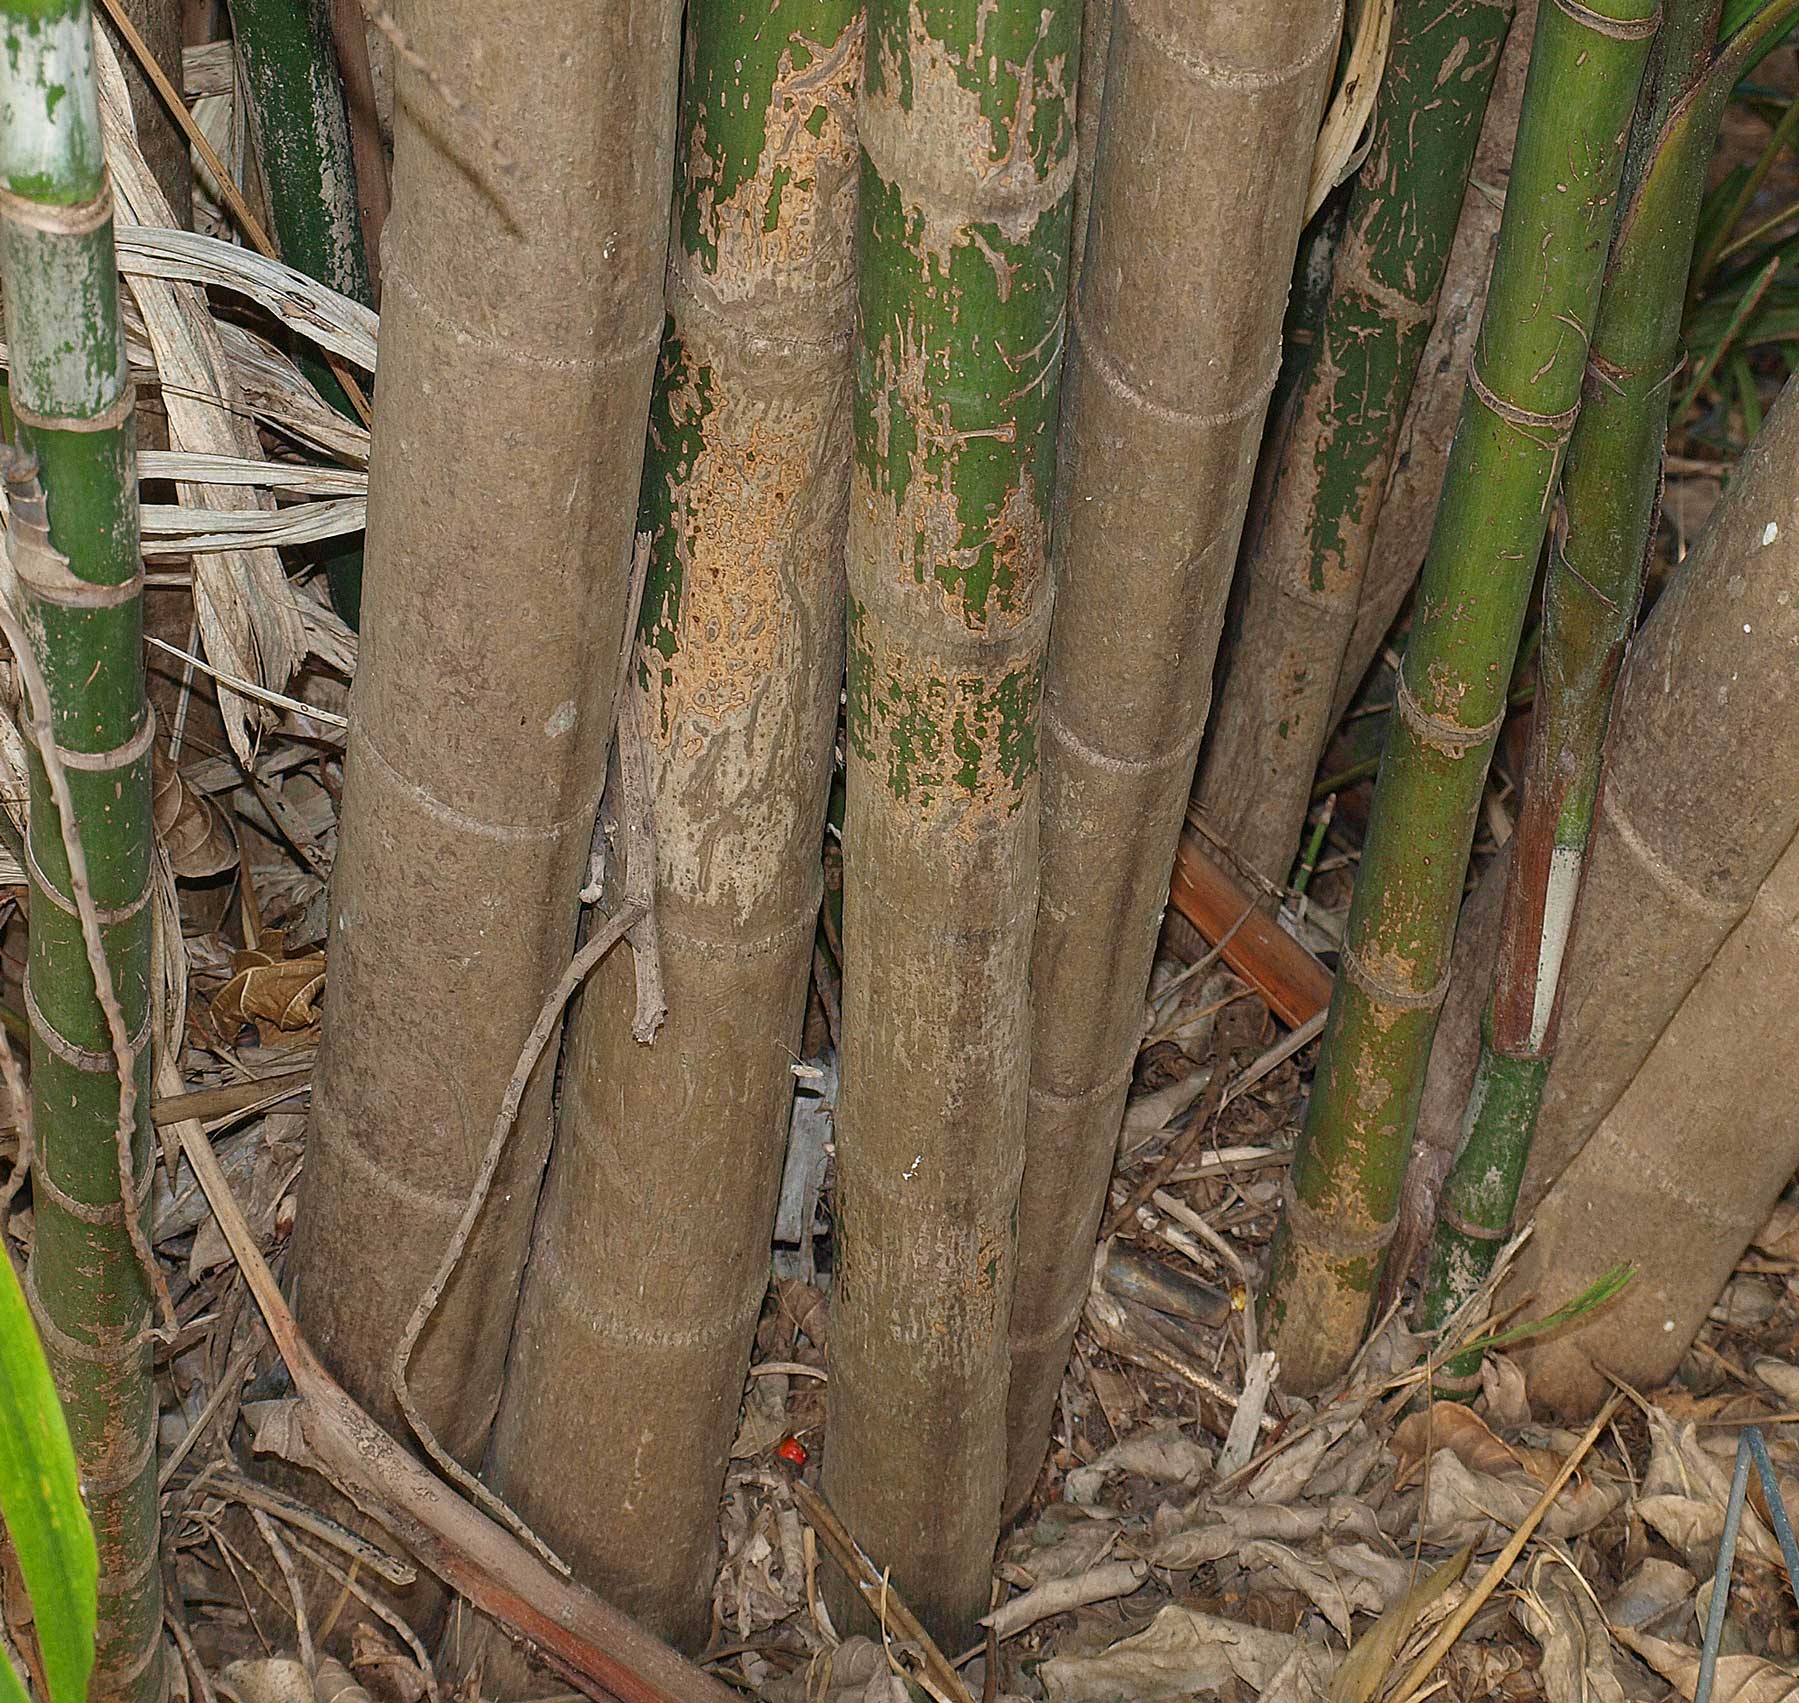   Ptychosperma macarthurii  stems with leaf scar rings 